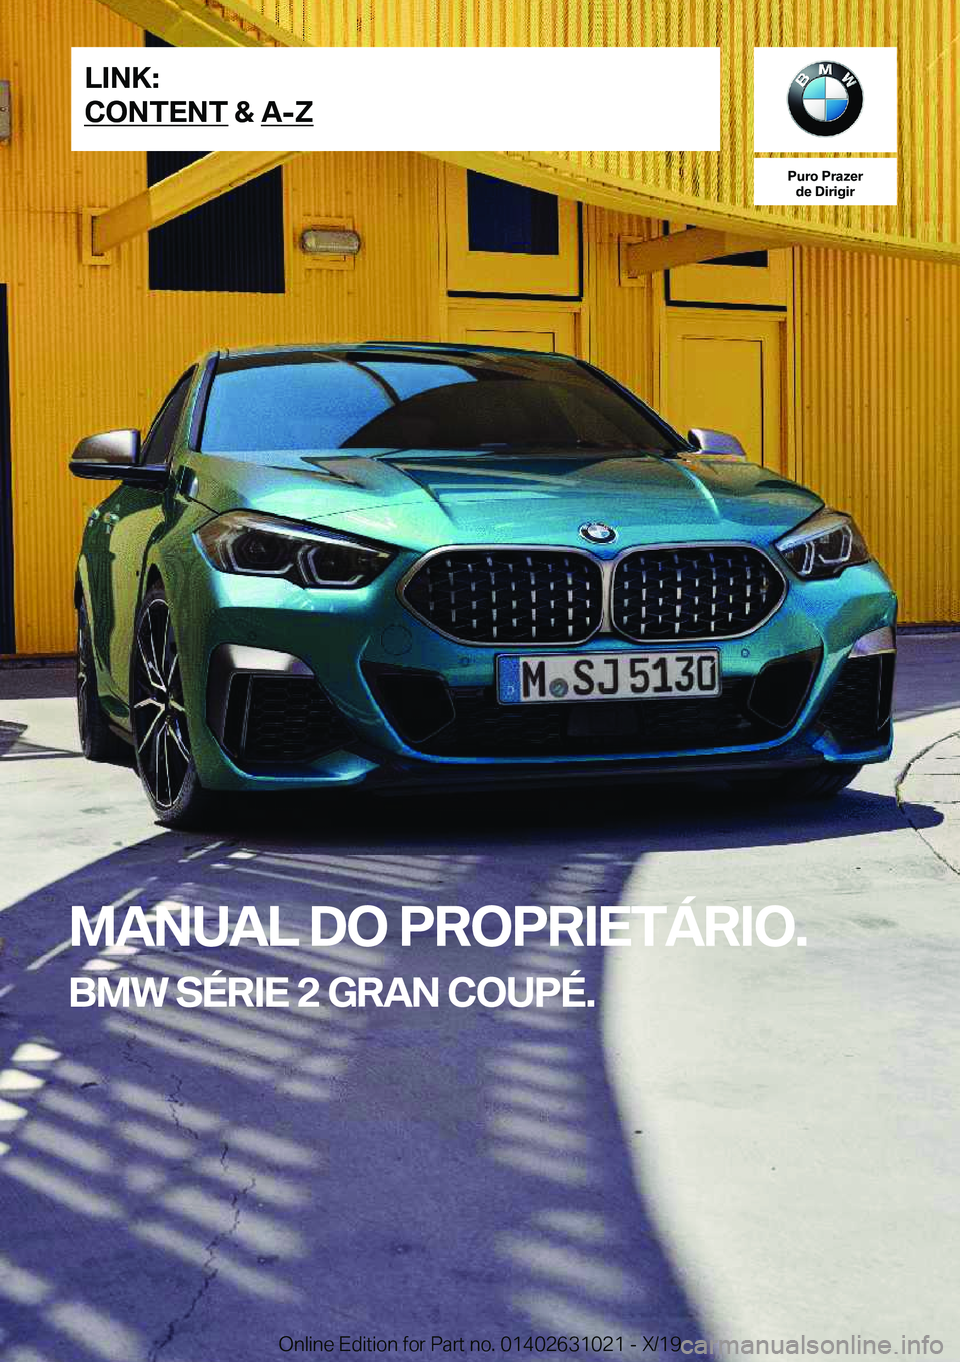 BMW 2 SERIES GRAN COUPE 2020  Manual do condutor (in Portuguese) �P�u�r�o��P�r�a�z�e�r�d�e��D�i�r�i�g�i�r
�M�A�N�U�A�L��D�O��P�R�O�P�R�I�E�T�Á�R�I�O�.
�B�M�W��S�